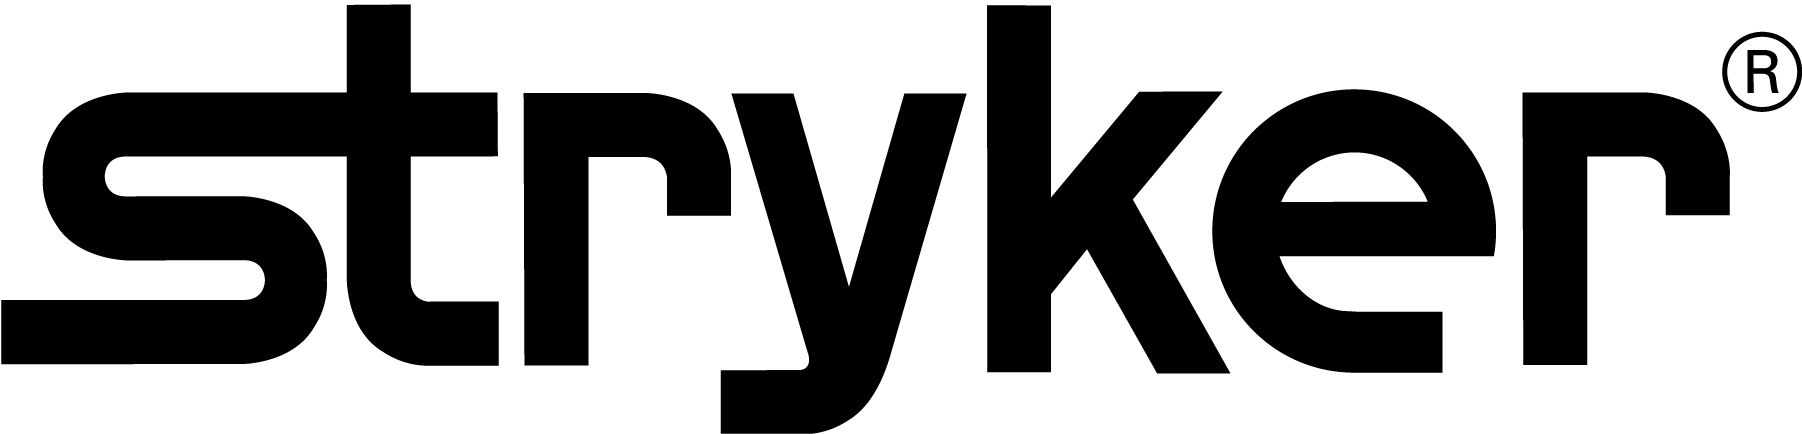 stryker-logo.jpg